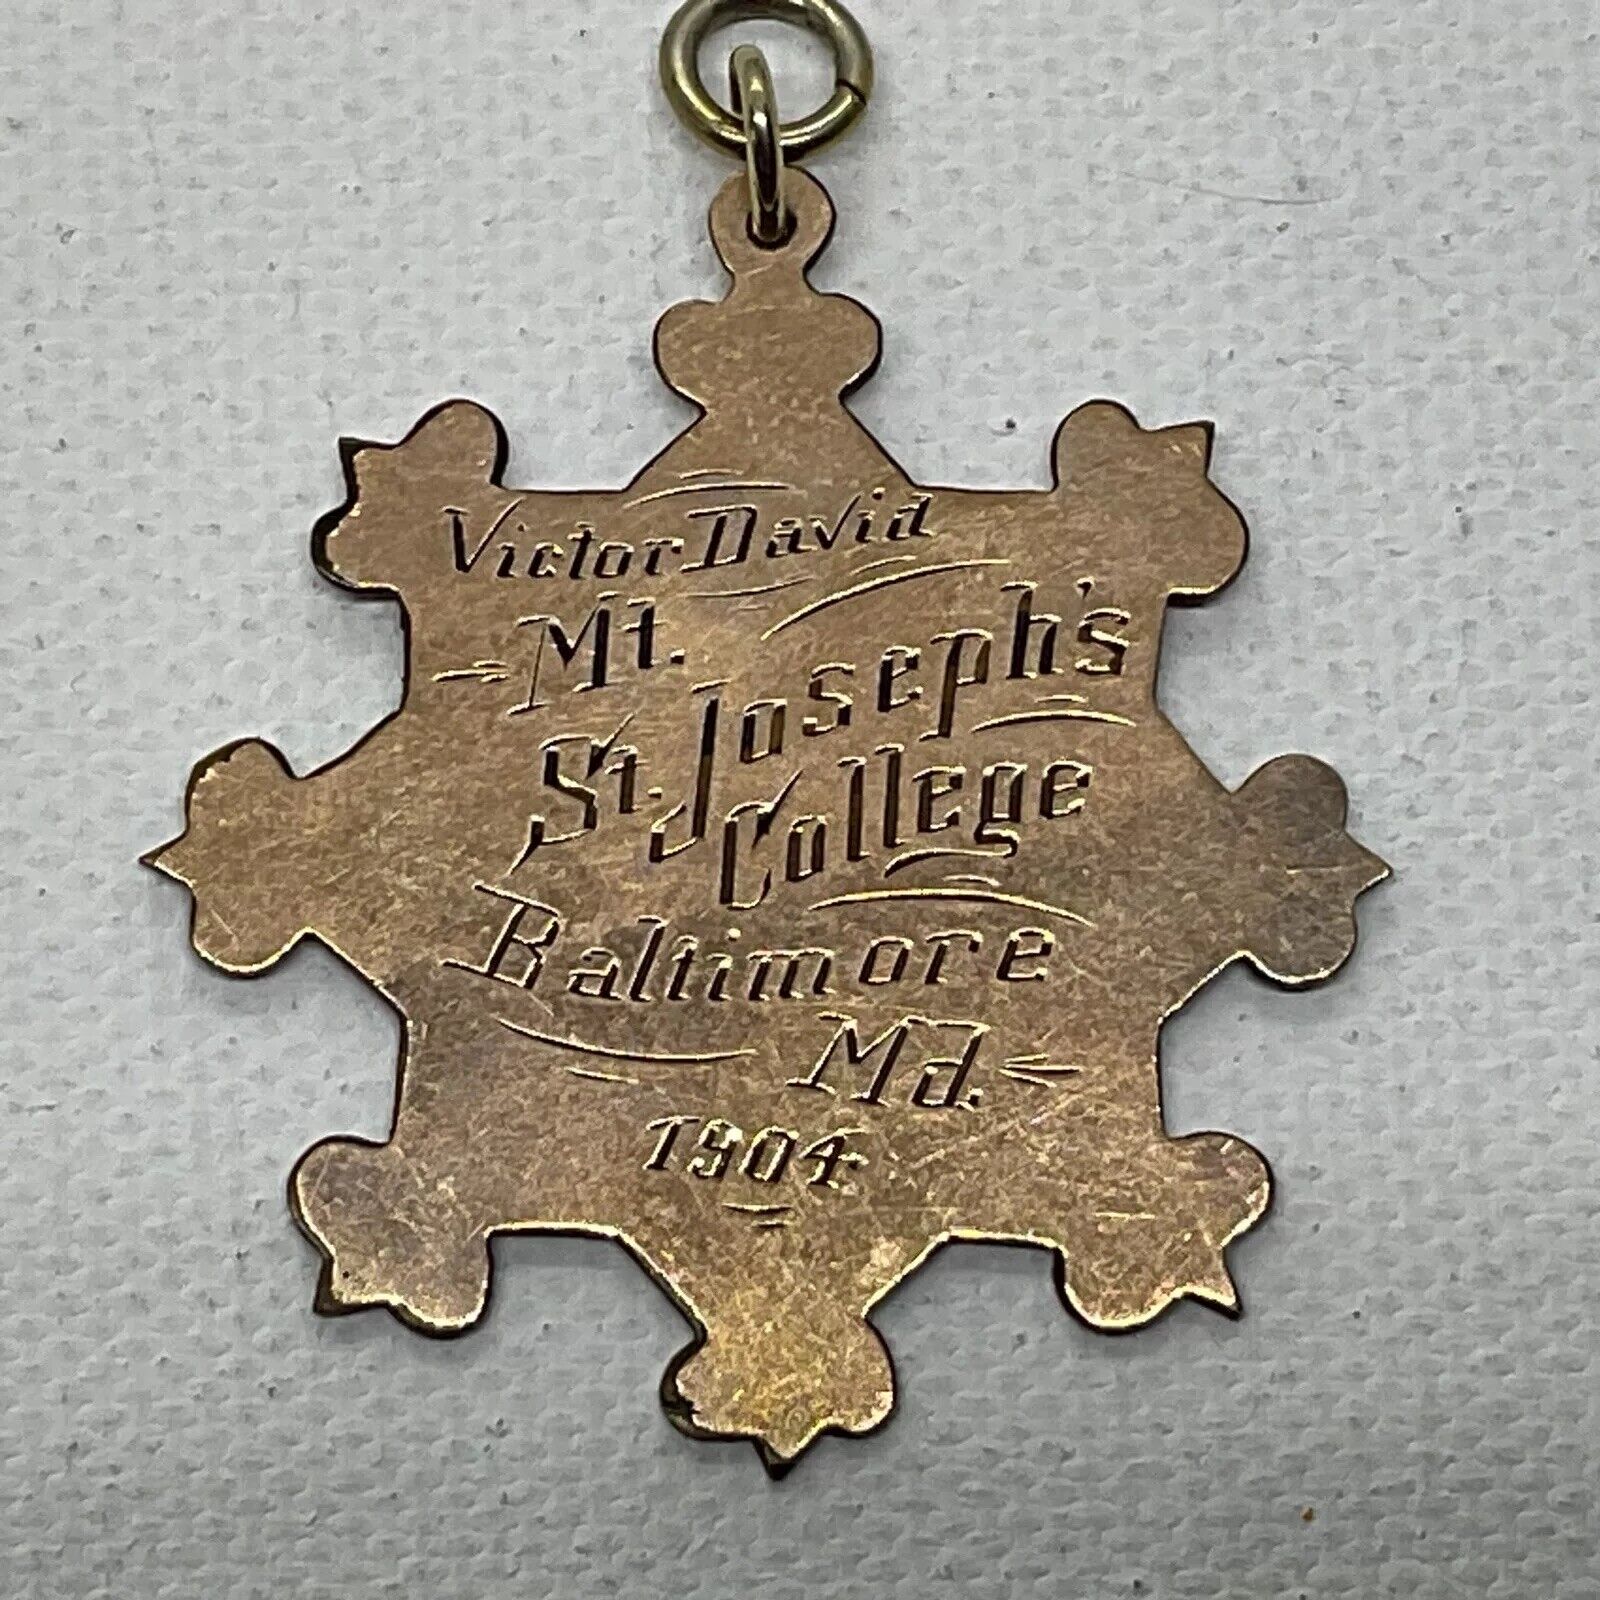 Mt St. Joseph's College Baltimore MD 1904 Victor David Grammar Medal Gold Filled